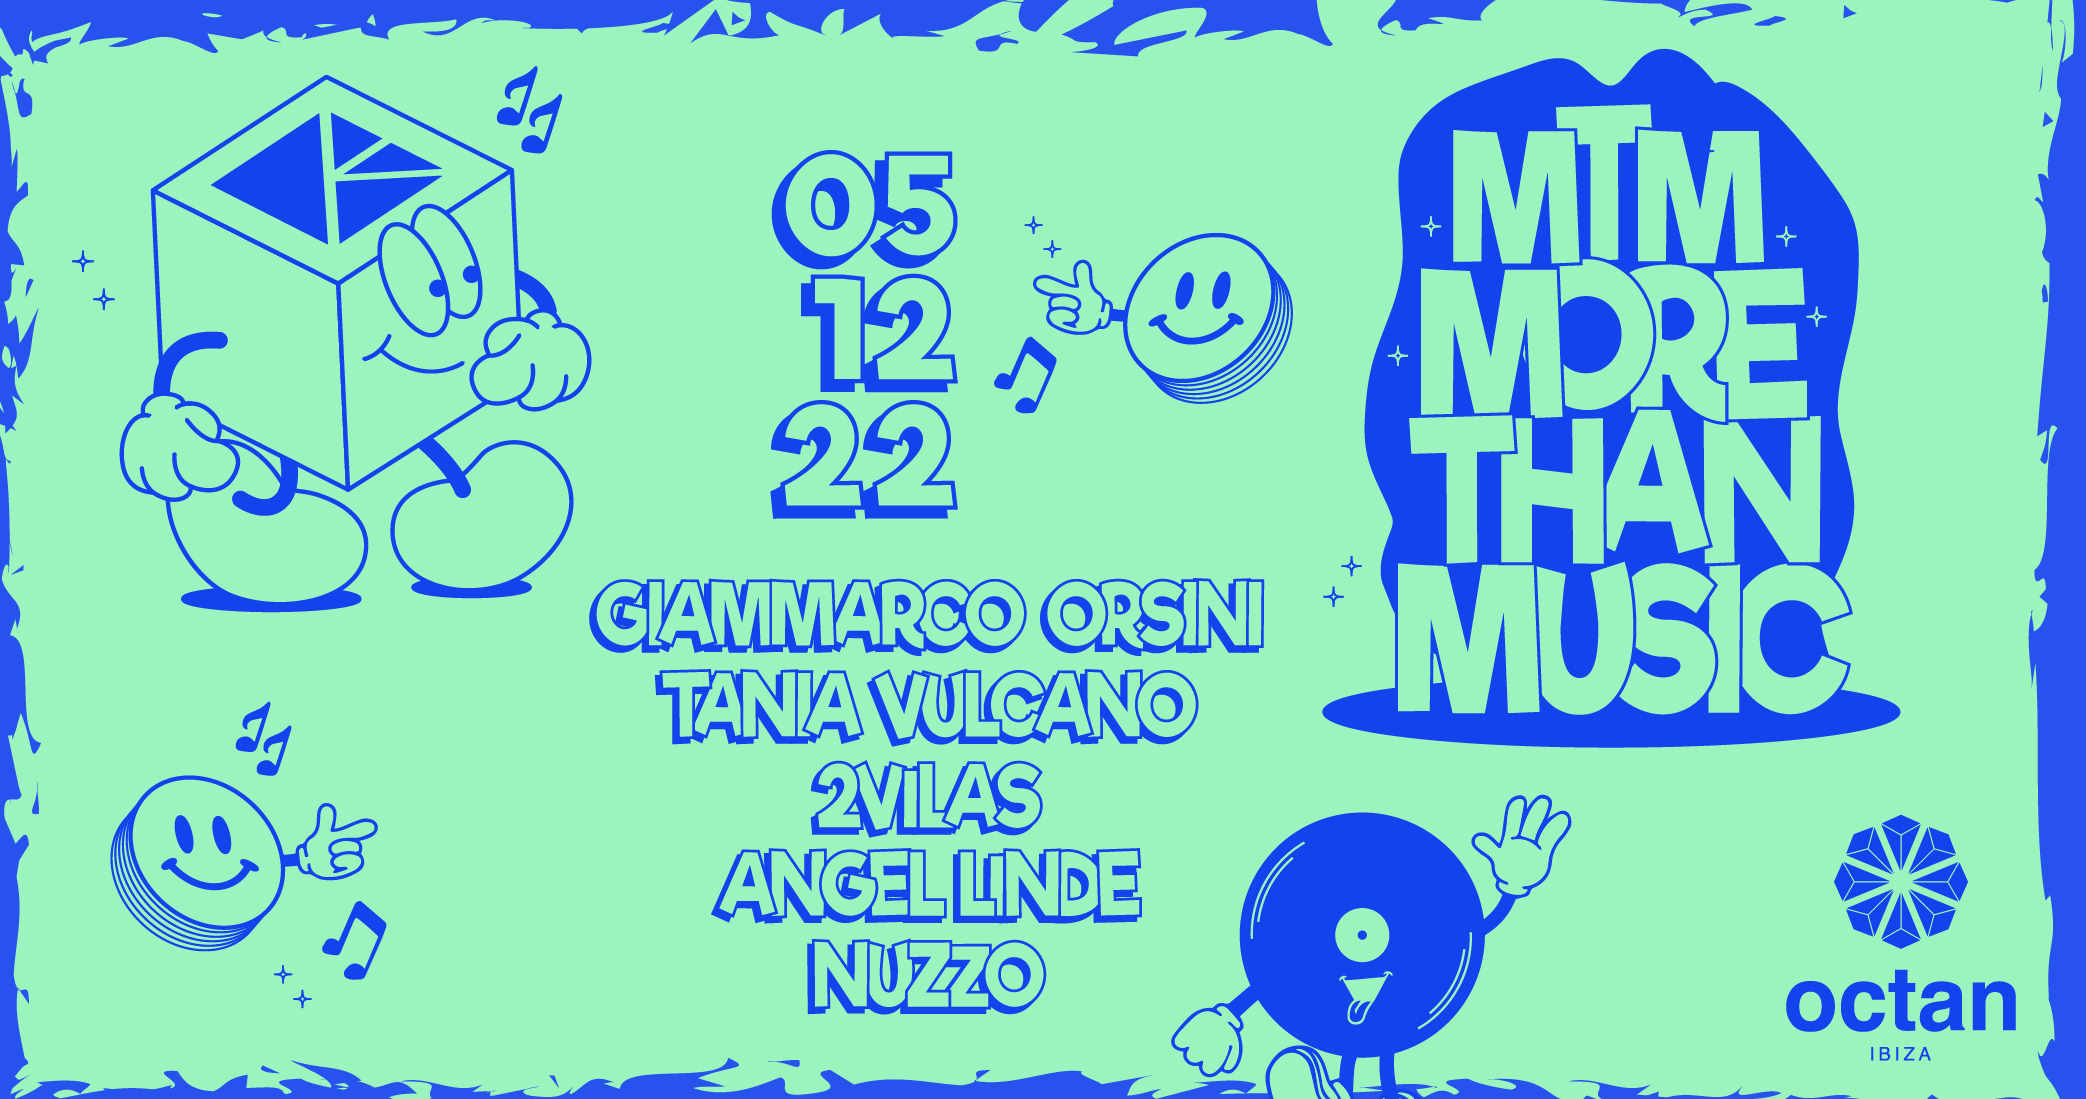 MTM with Giammarco Orsini, Tania Vulcano, 2vilas, Angel Linde, Nuzzo - Página frontal